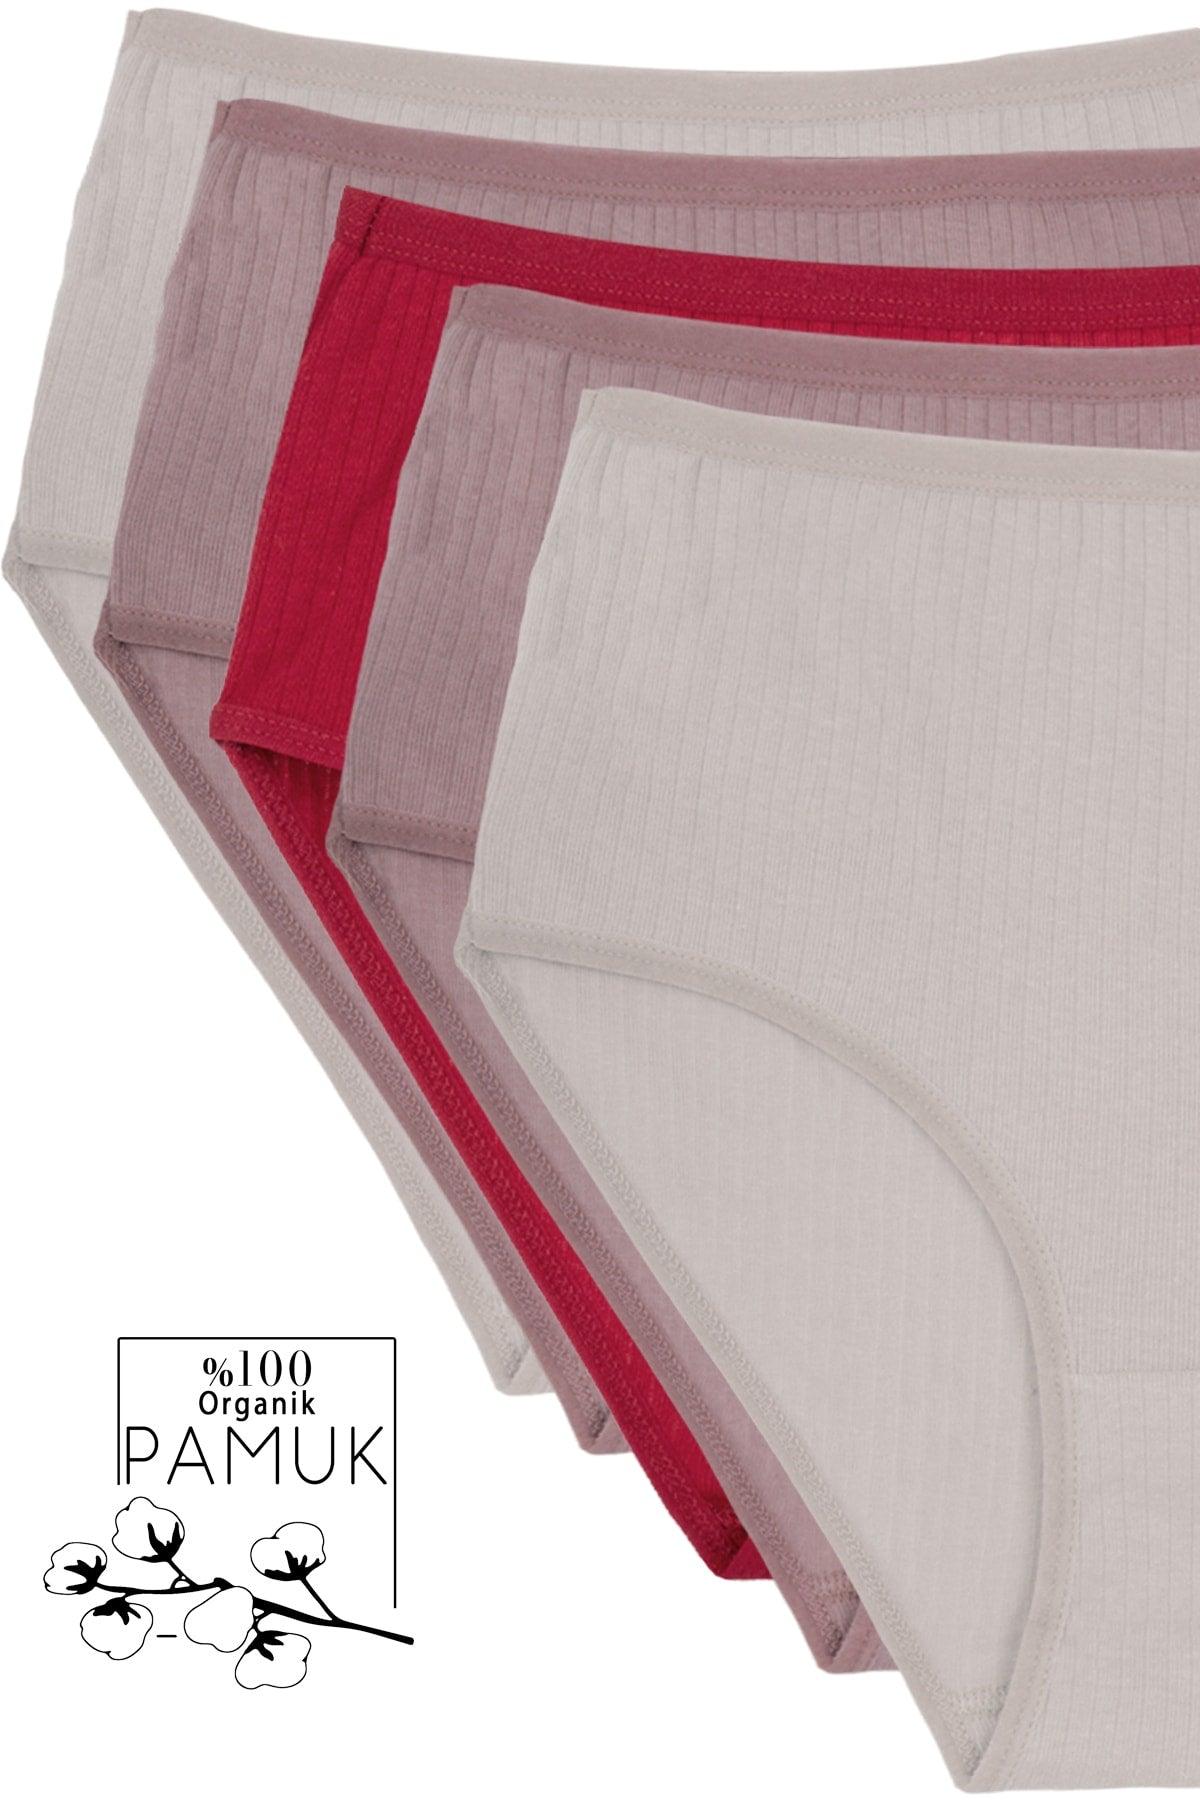 5-Pack Mixed Women's High Waist Corduroy Cotton Panties Stone, Mink, Claret Red Bt2-a9 - Swordslife